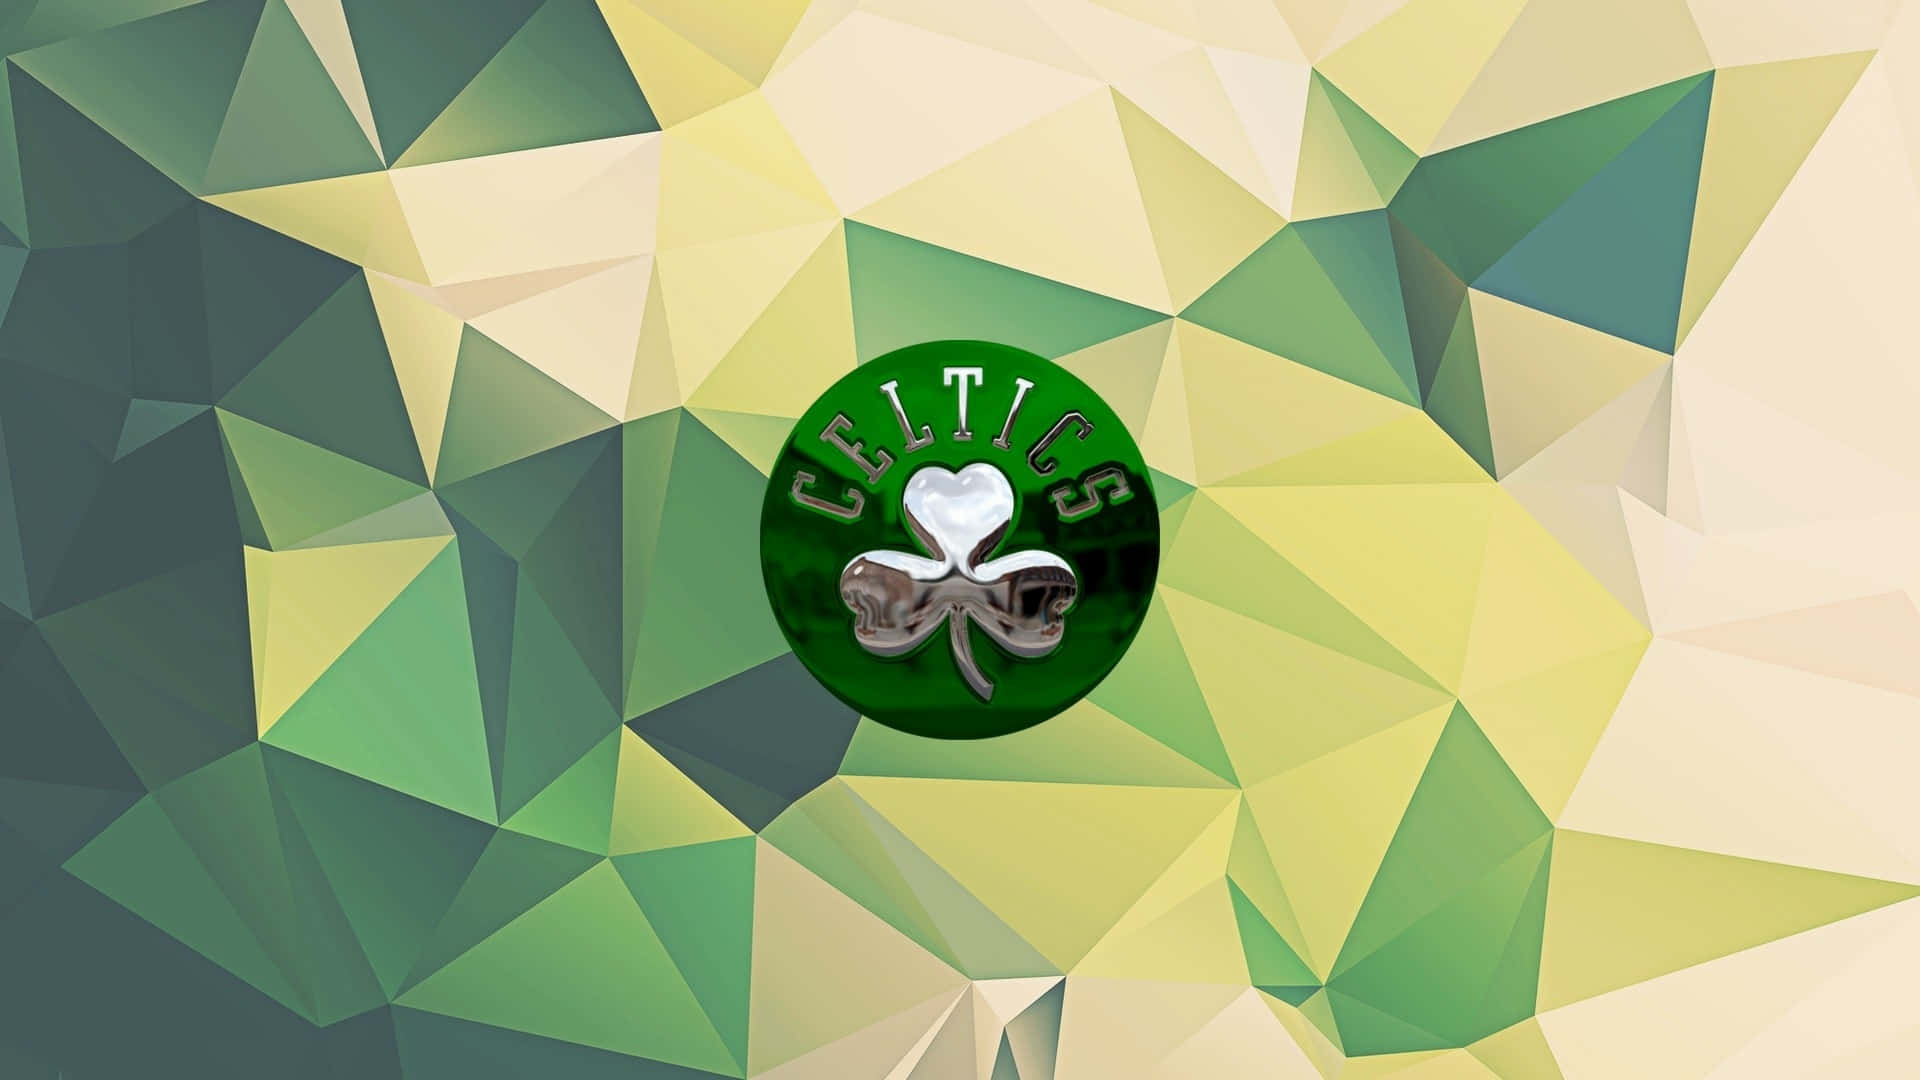 The Boston Celtics - Passionately Defying the Odds